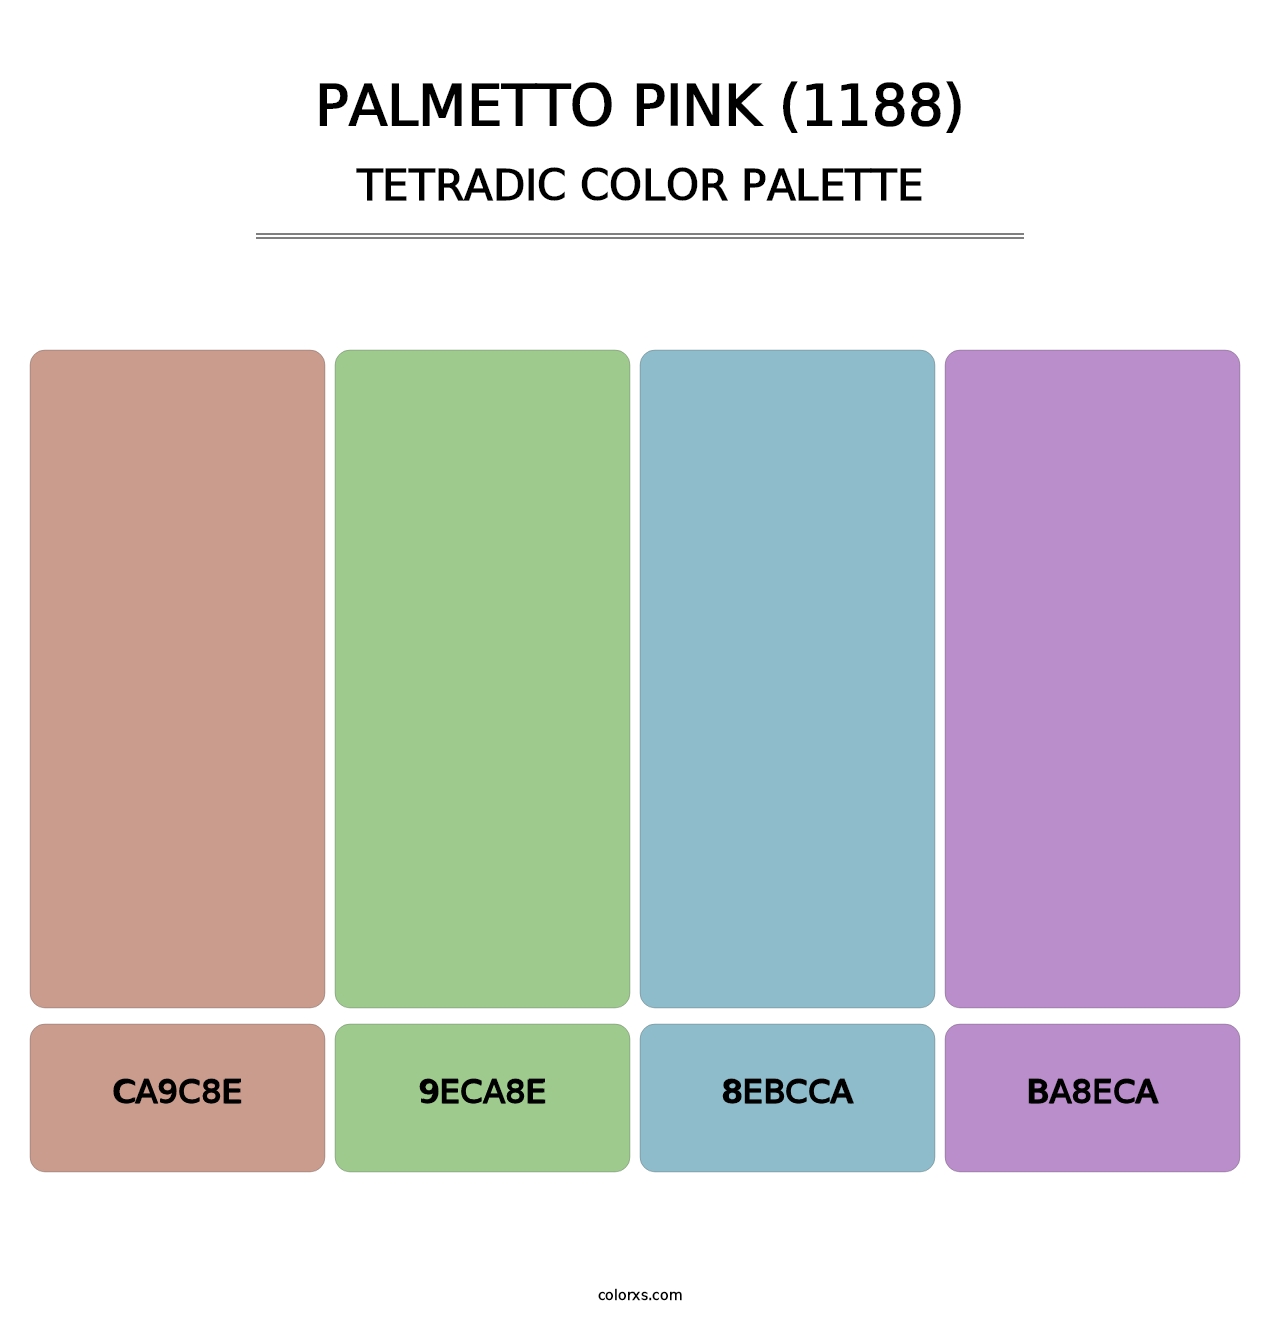 Palmetto Pink (1188) - Tetradic Color Palette